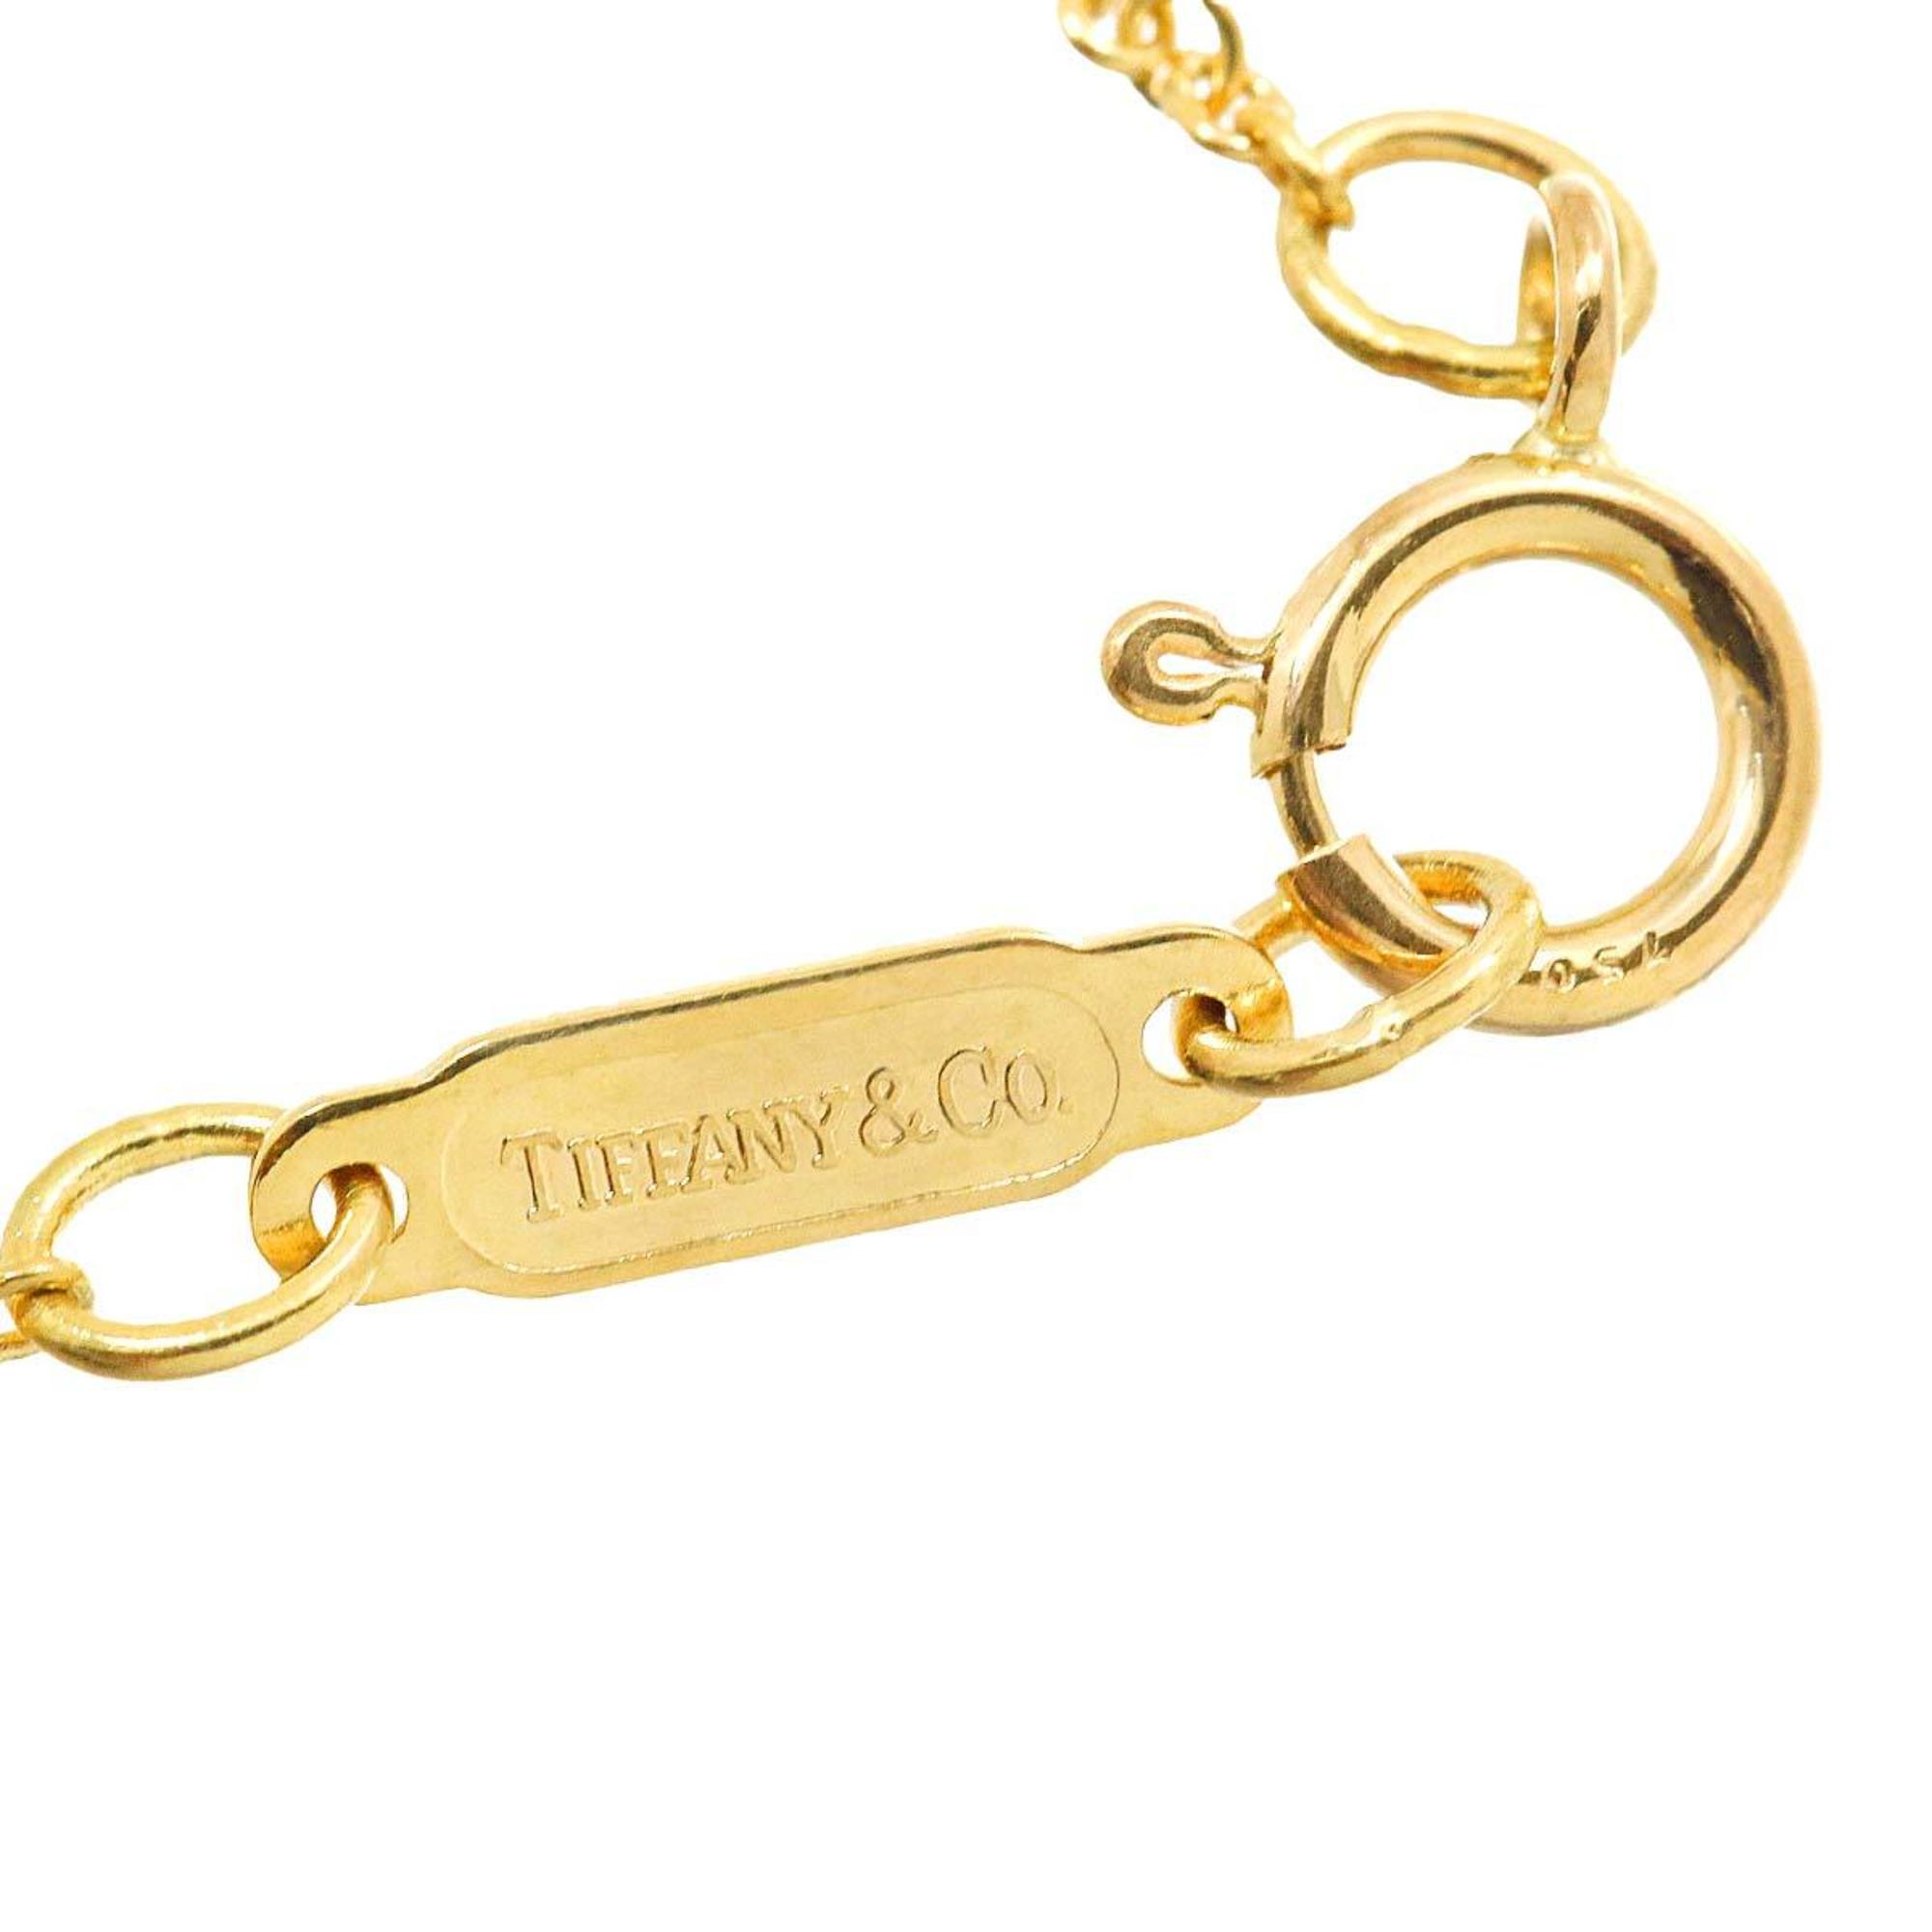 Tiffany & Co. Necklace 41cm K18 YG Yellow Gold 750 Ribbon